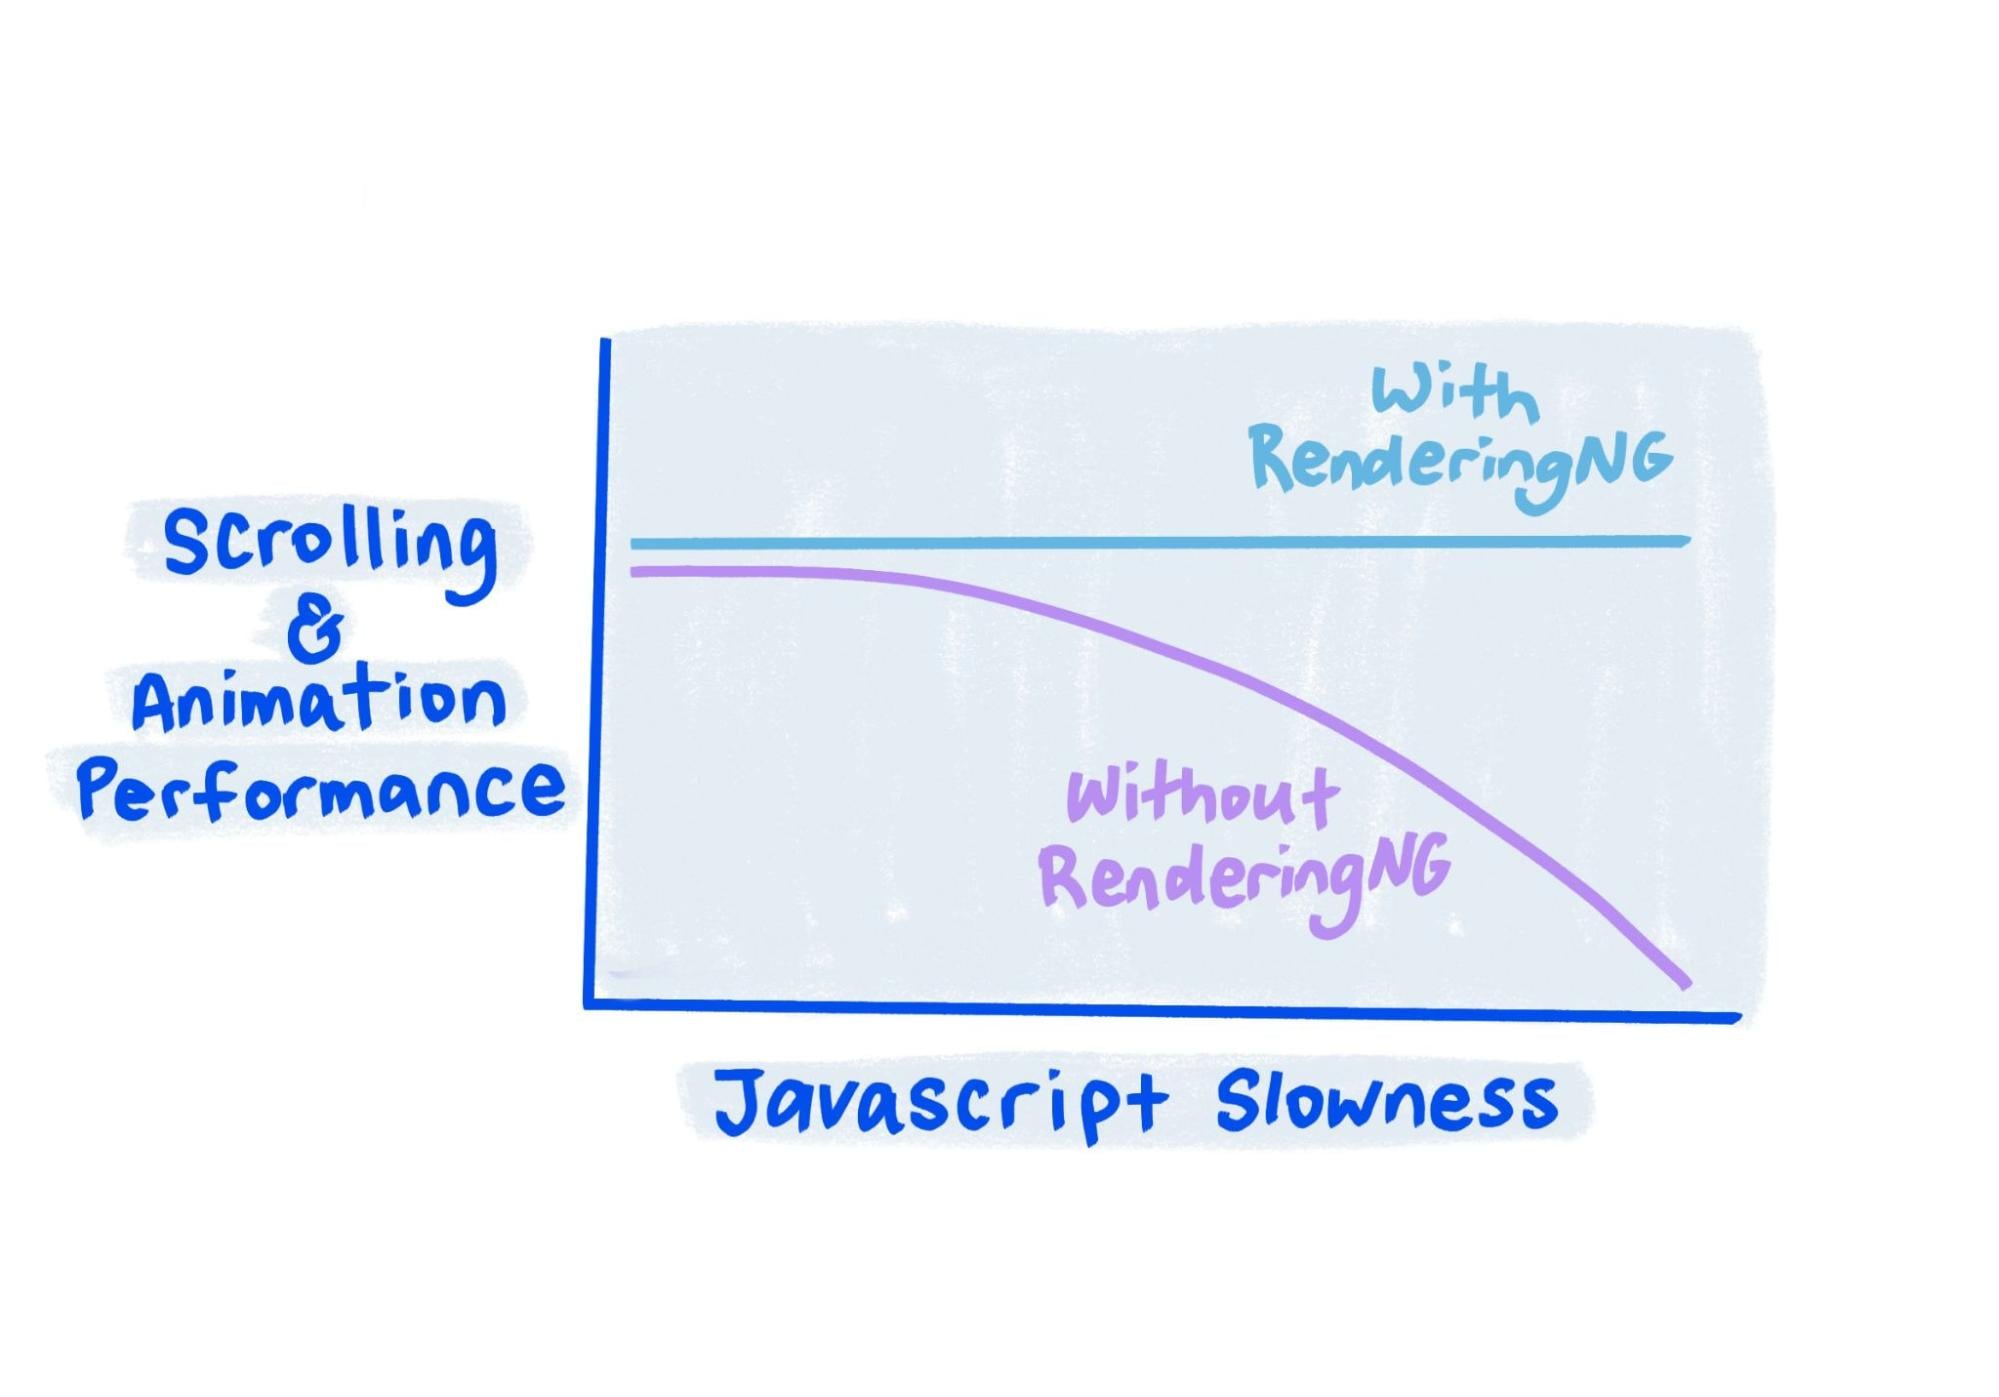 Sketch에서는 JavaScript가 매우 느릴 때도 RenderingNG 성능이 안정적으로 유지되는 것을 볼 수 있습니다.